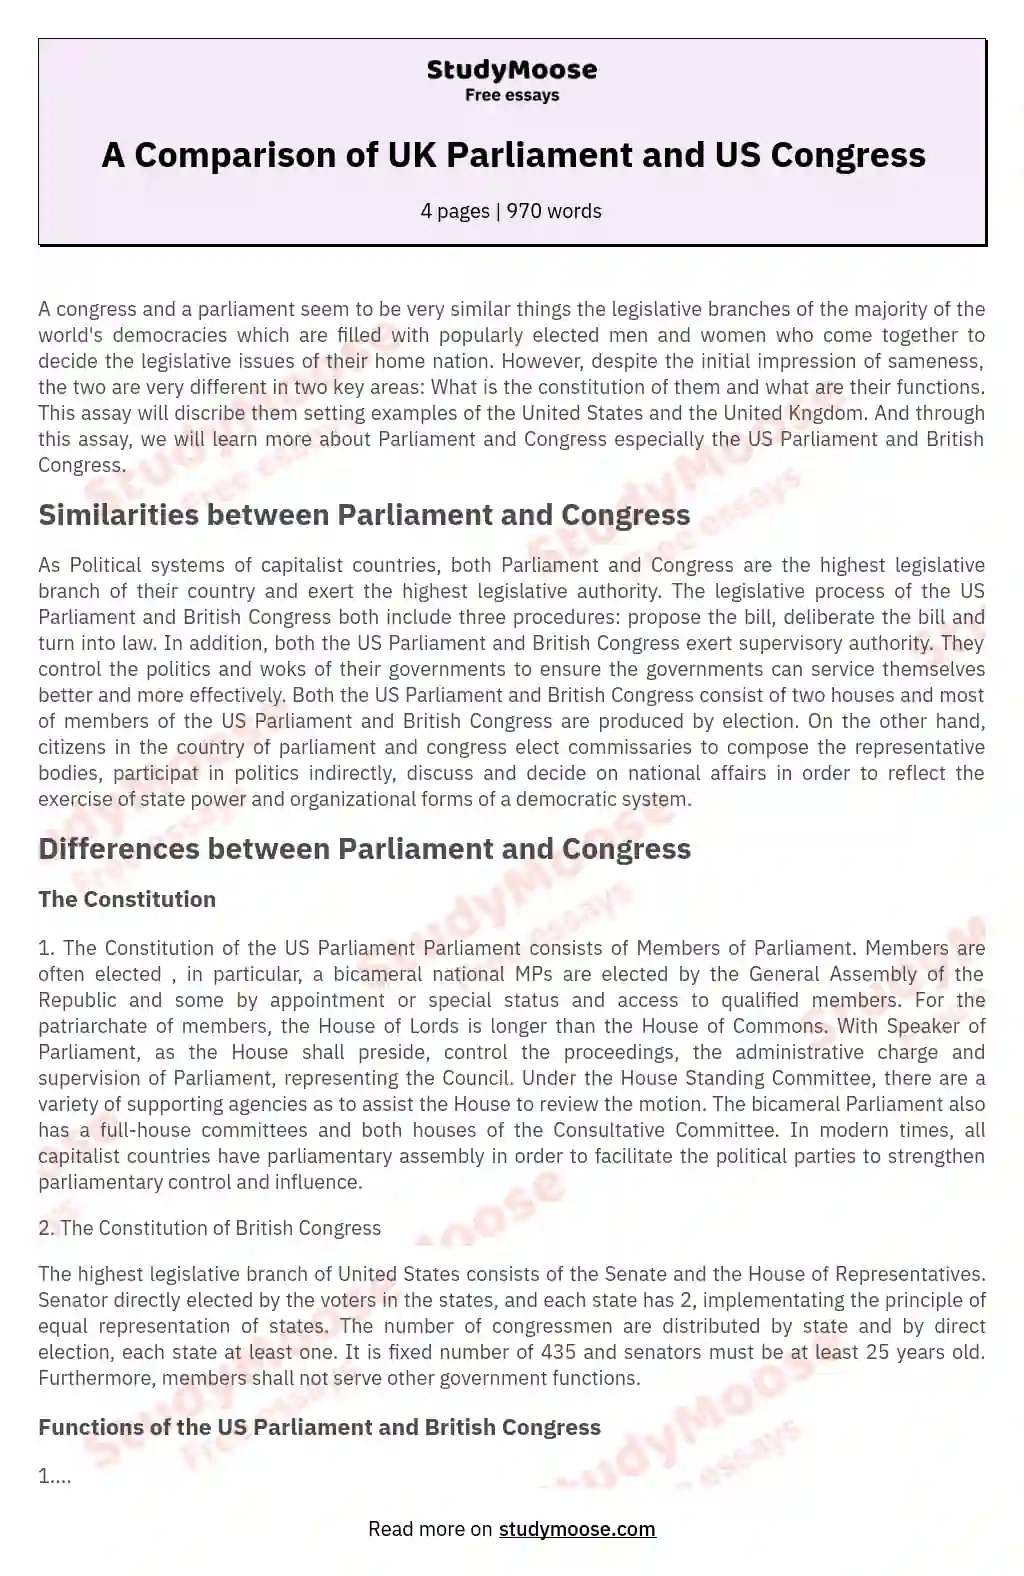 A Comparison of UK Parliament and US Congress essay